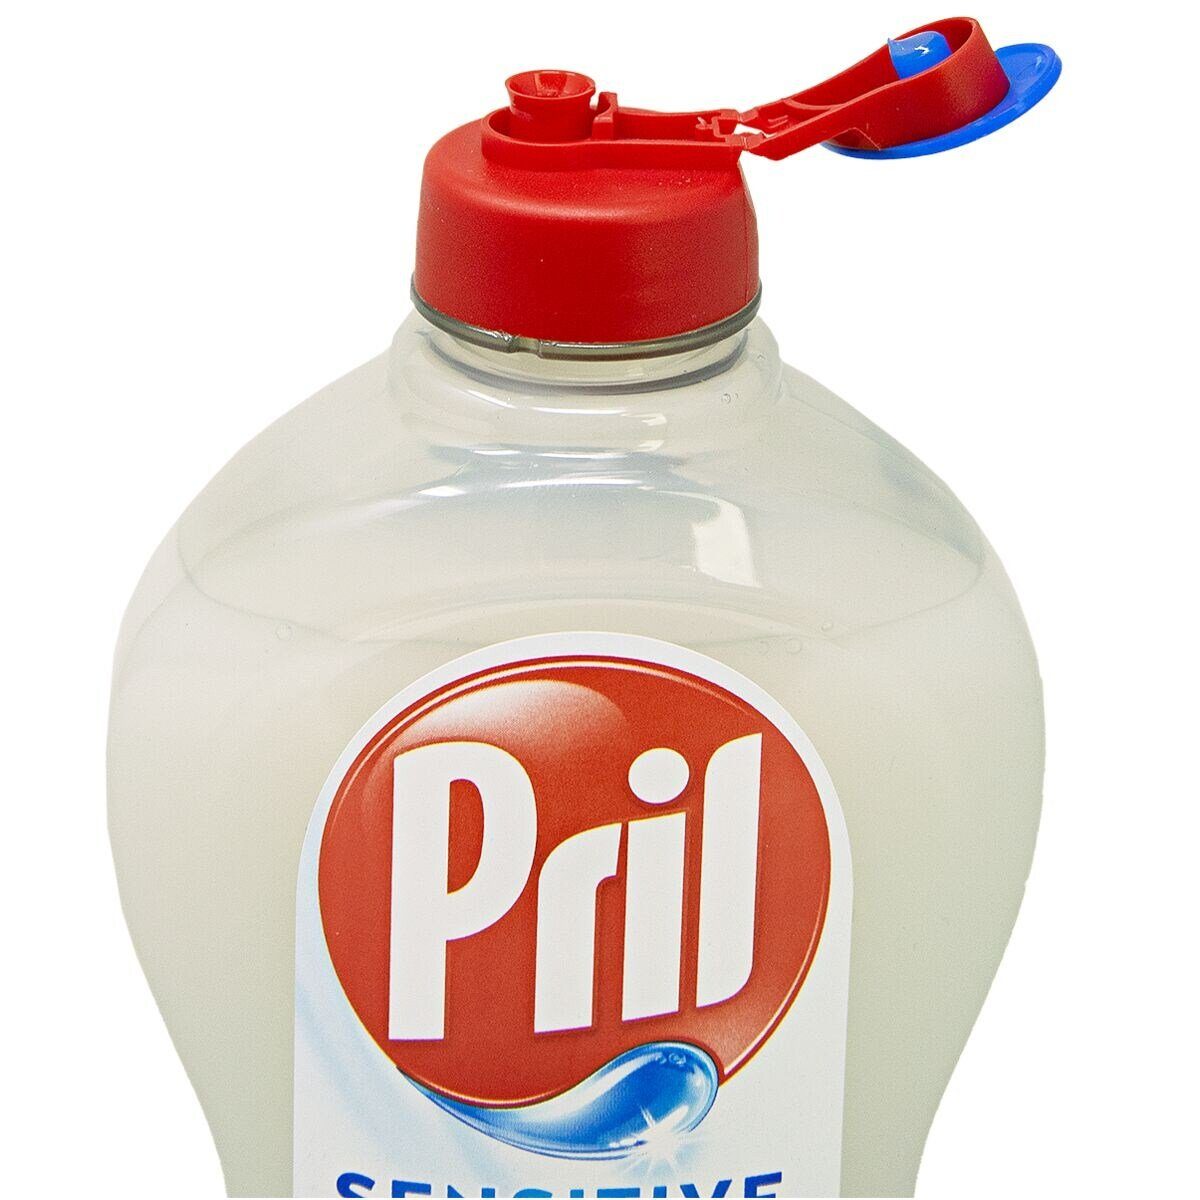 PRIL Sensitive Aloe Vera hautschonend Fettlösekraft) / (450 hohe ml, Geschirrspülmittel